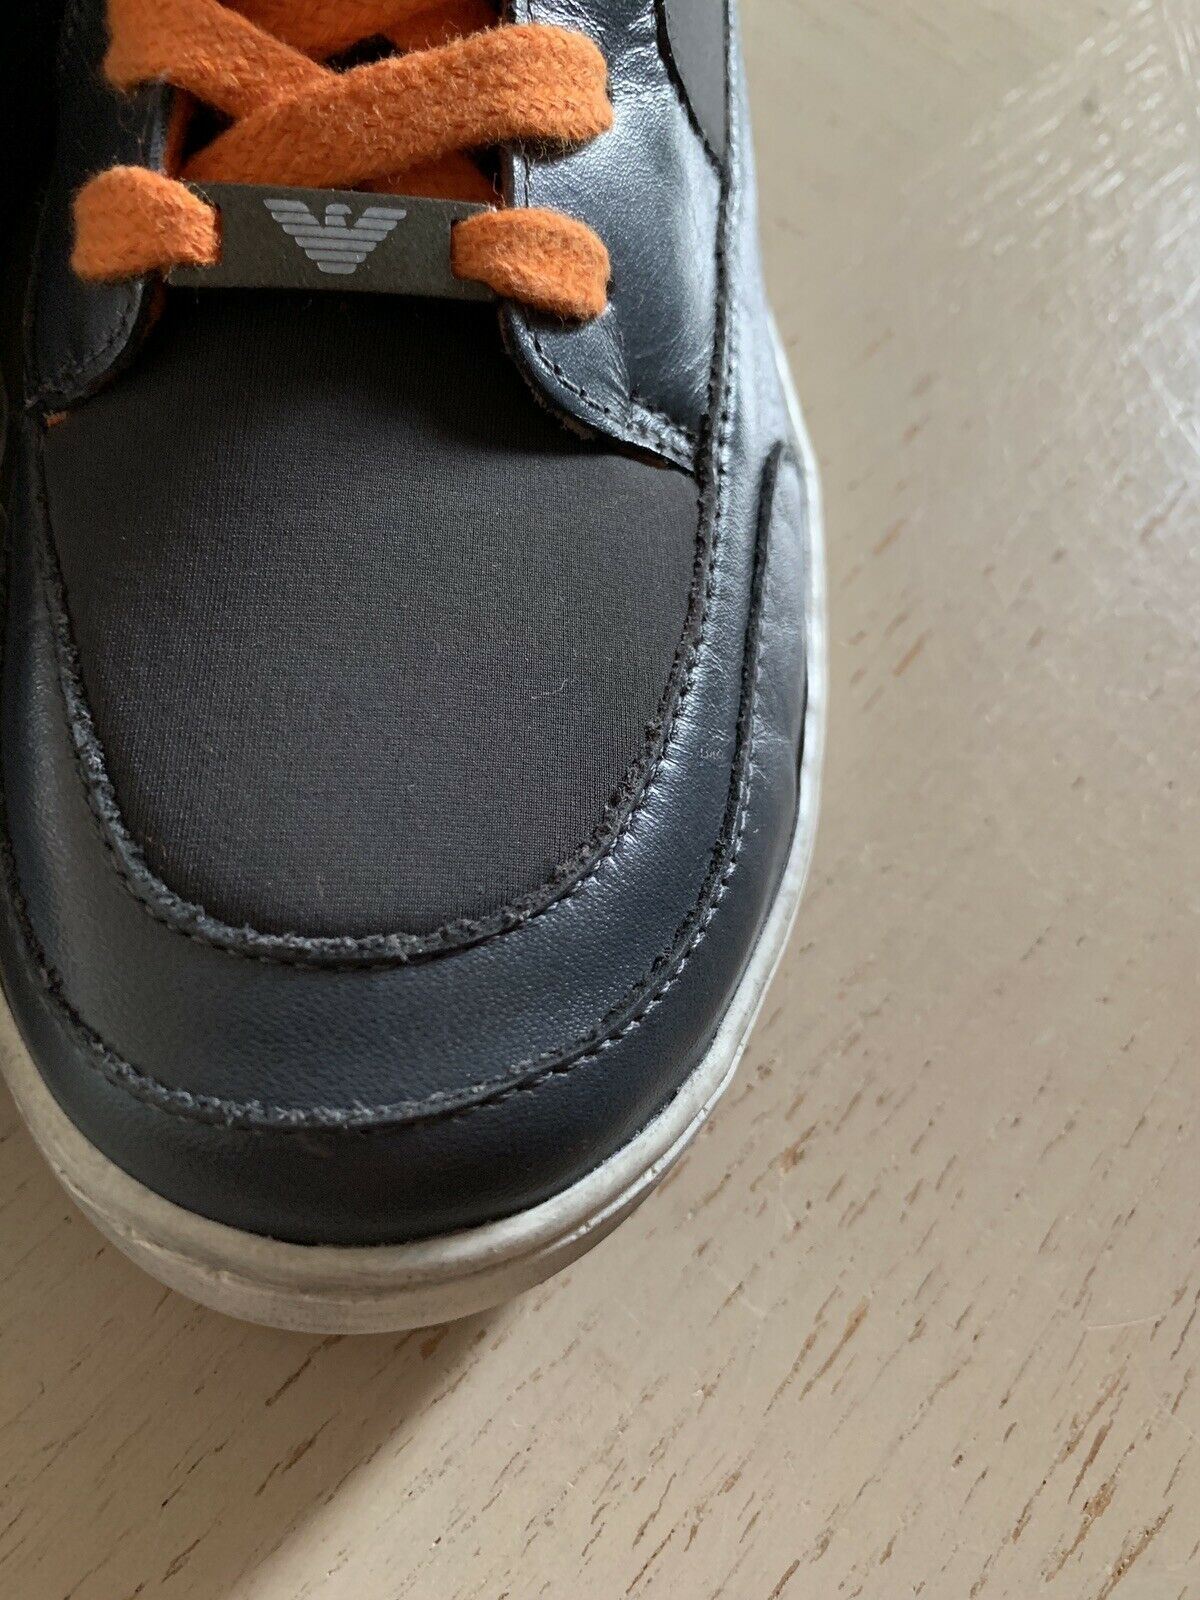 New Armani Junior Boys Leather/Nylon Sneakers Shoes Gray 2 US ( 33 Eur )